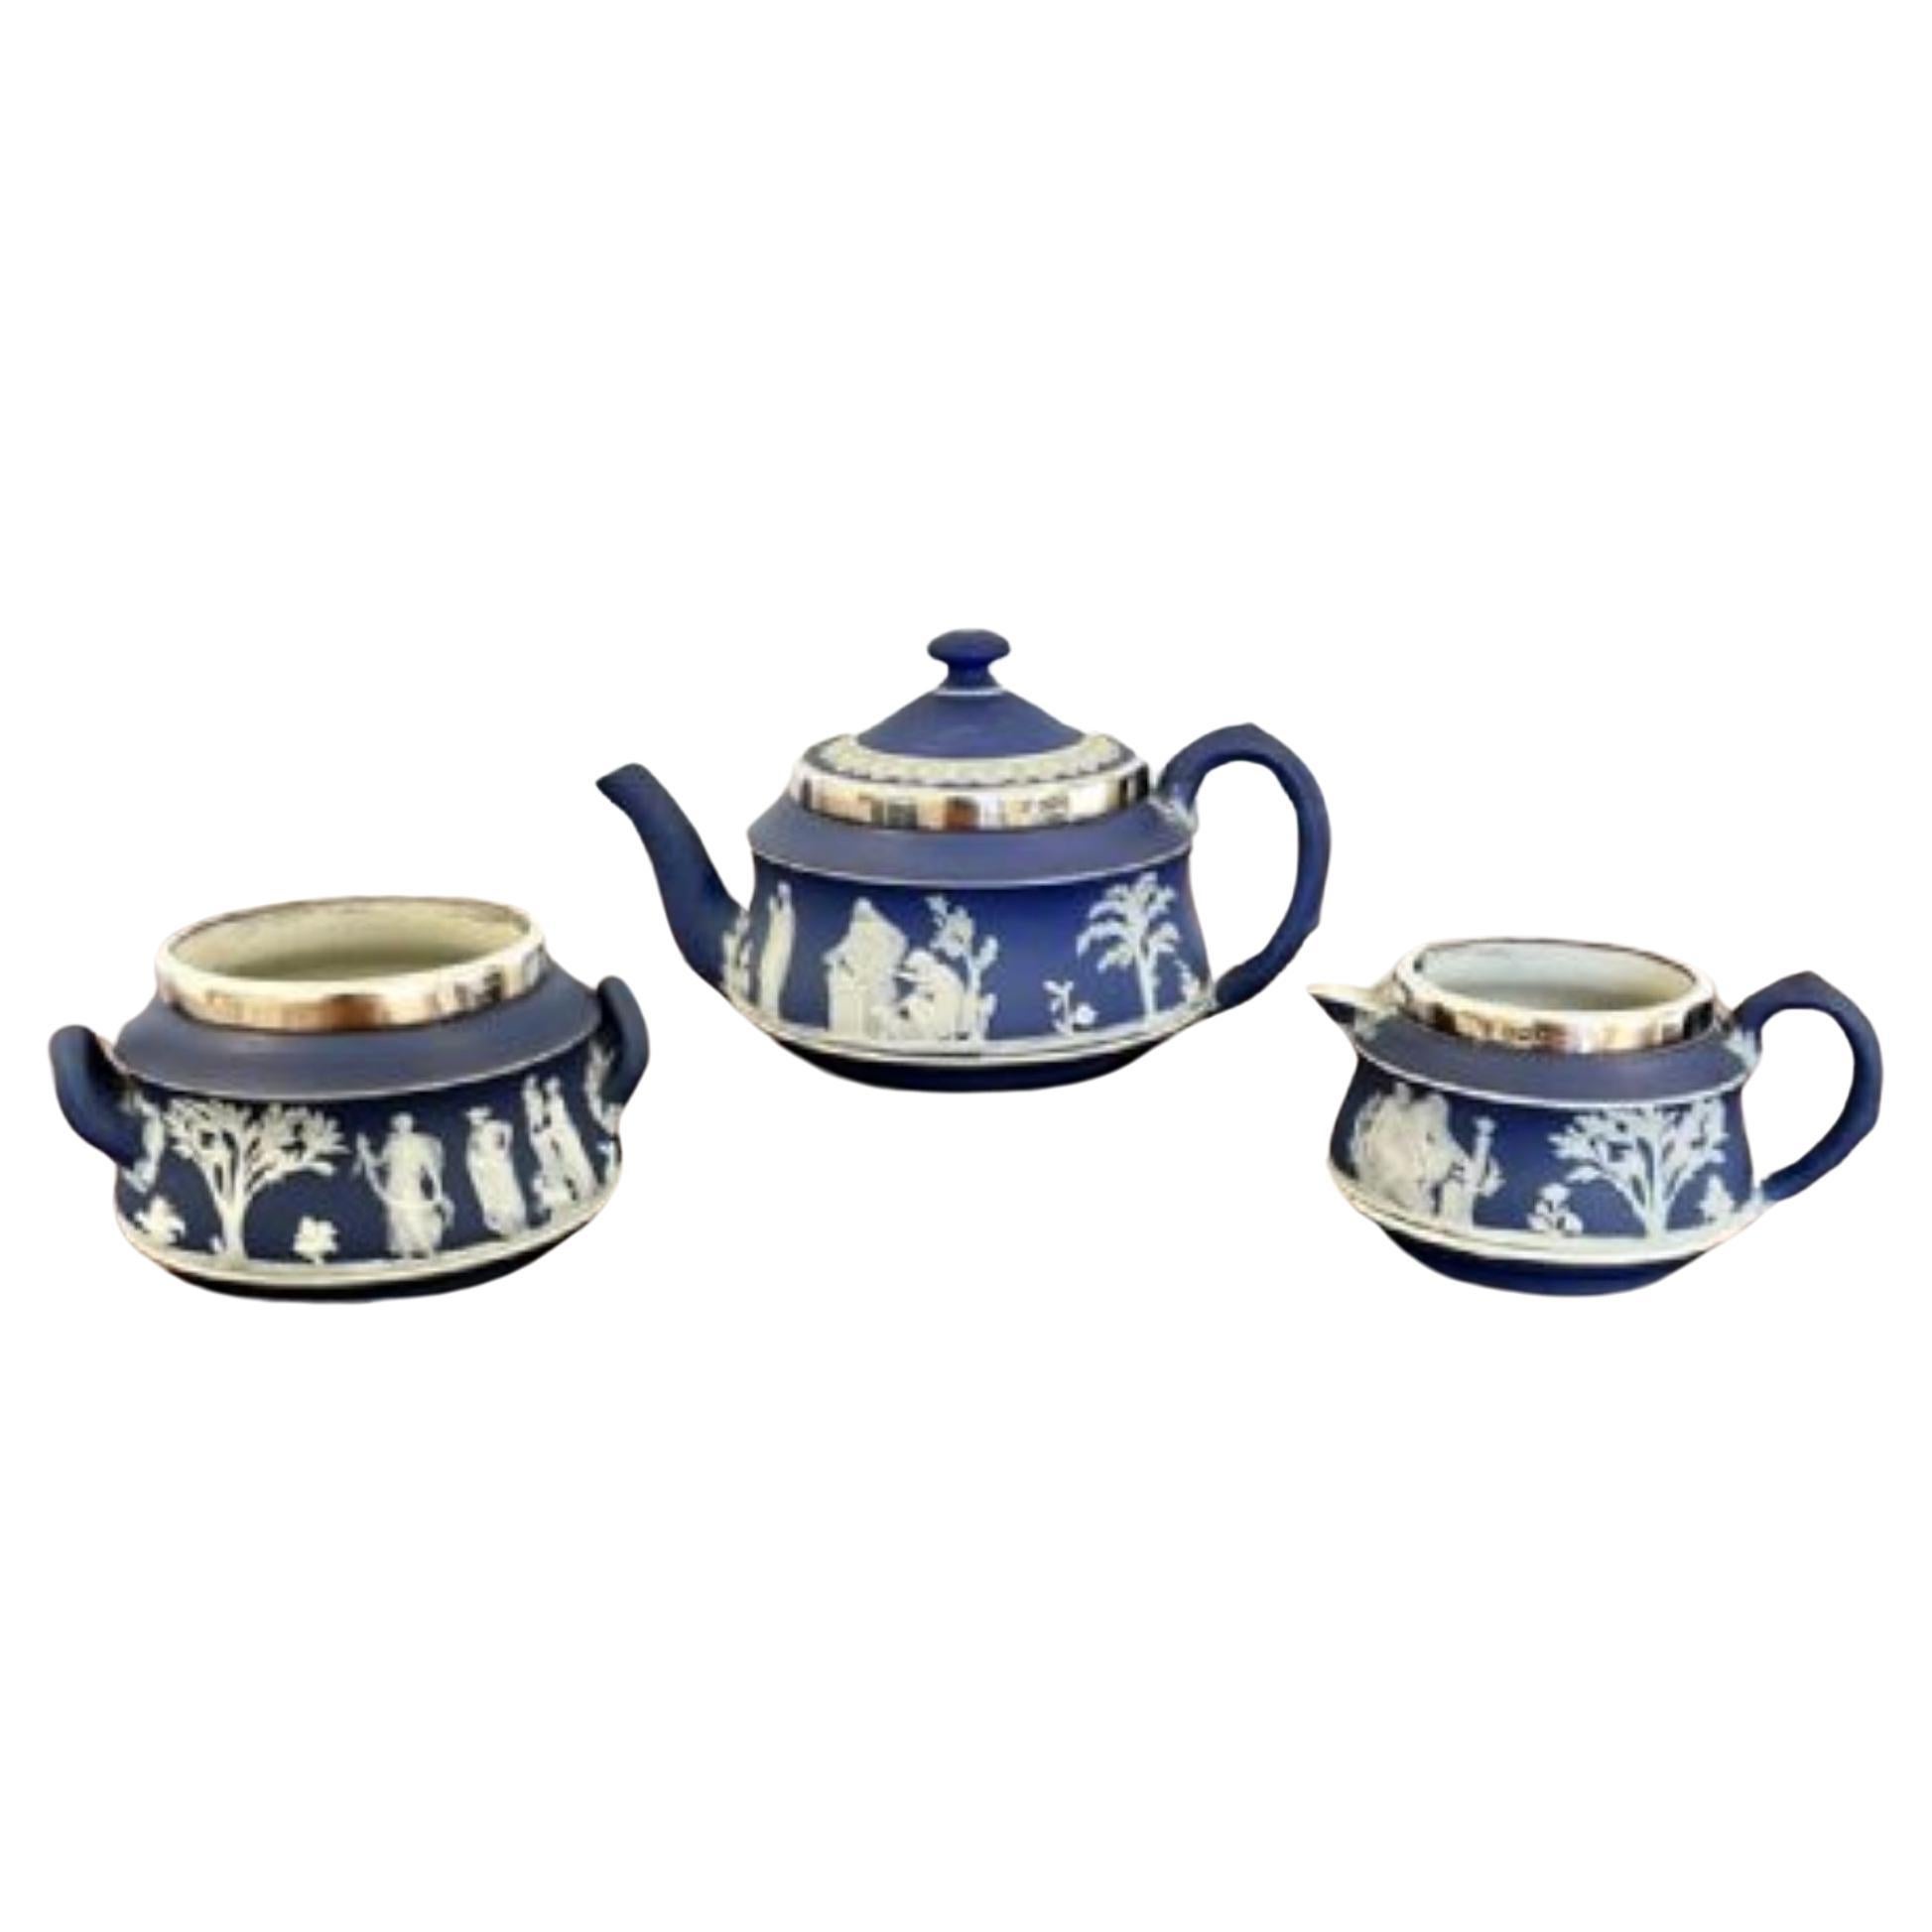 Quality antique Victorian silver mounted three piece Jasperware Wedgwood tea set